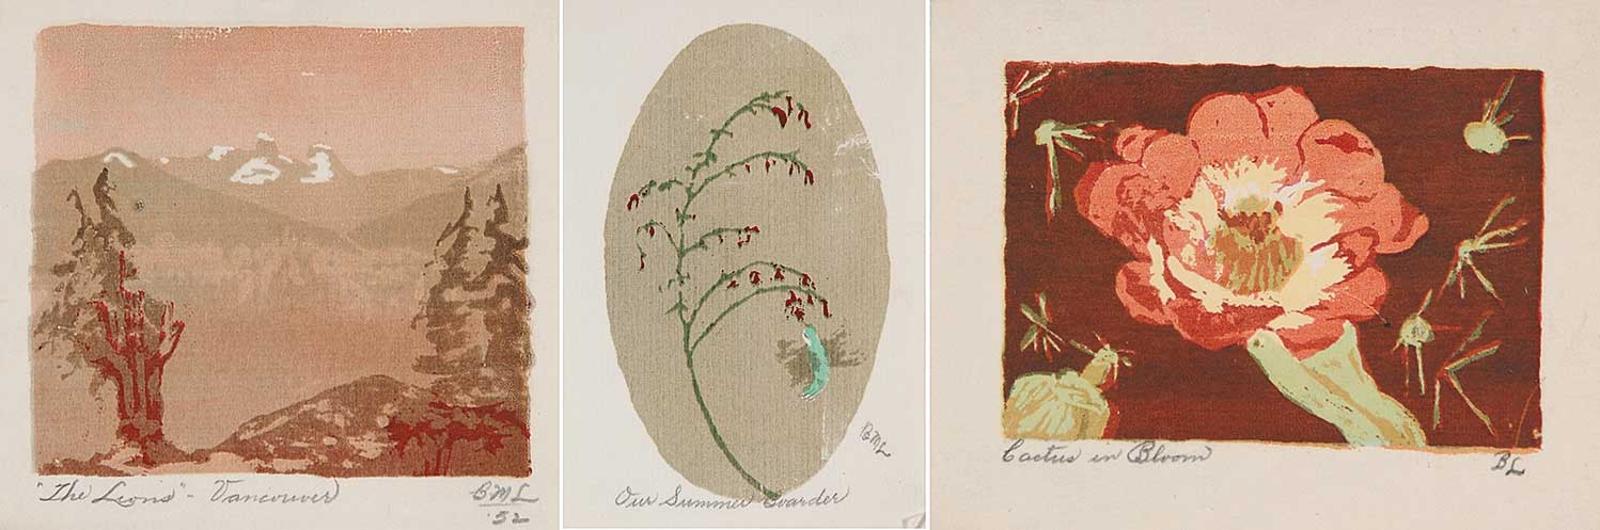 Bernice Langton - Cactus in Bloom